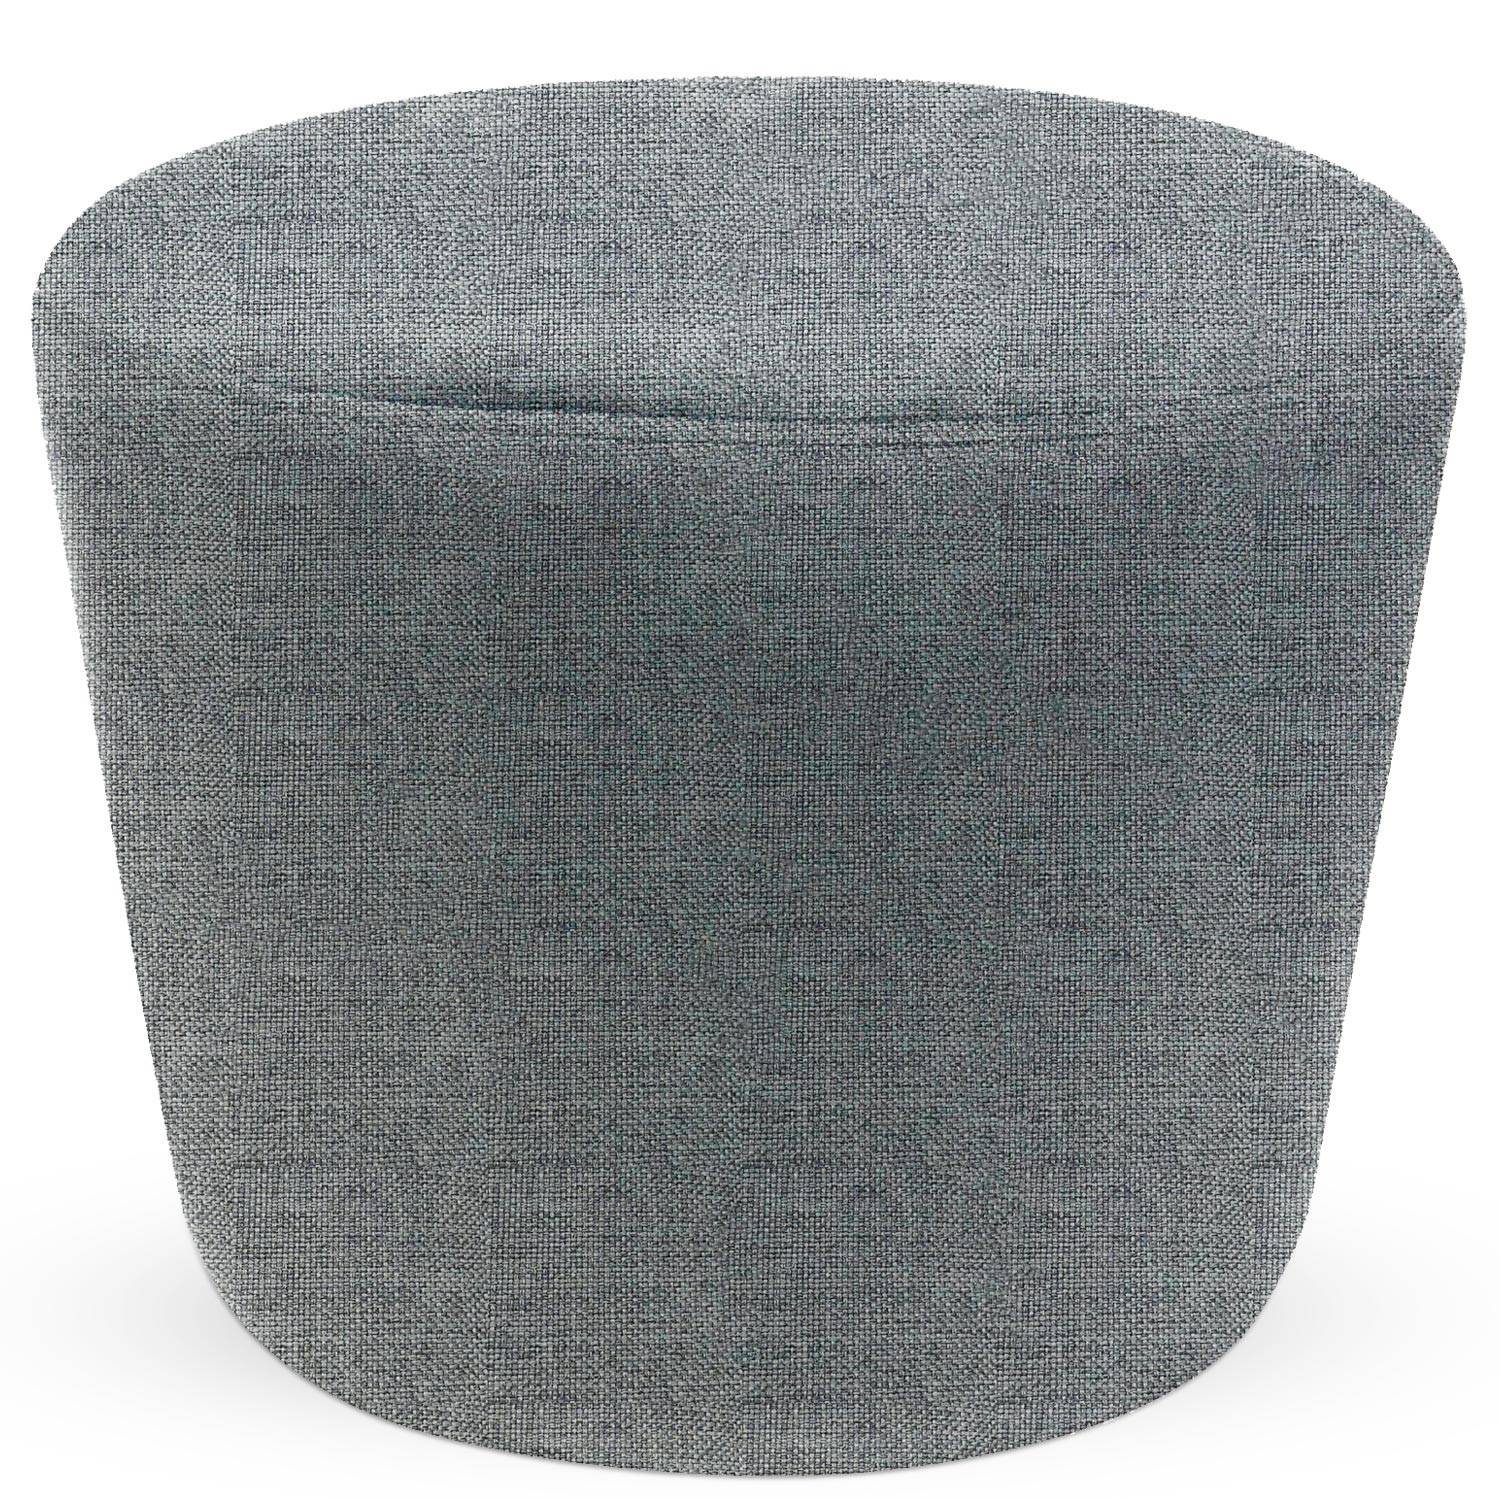 Fauteuil et repose-pieds en tissu gris - Snuggle - Kare Design